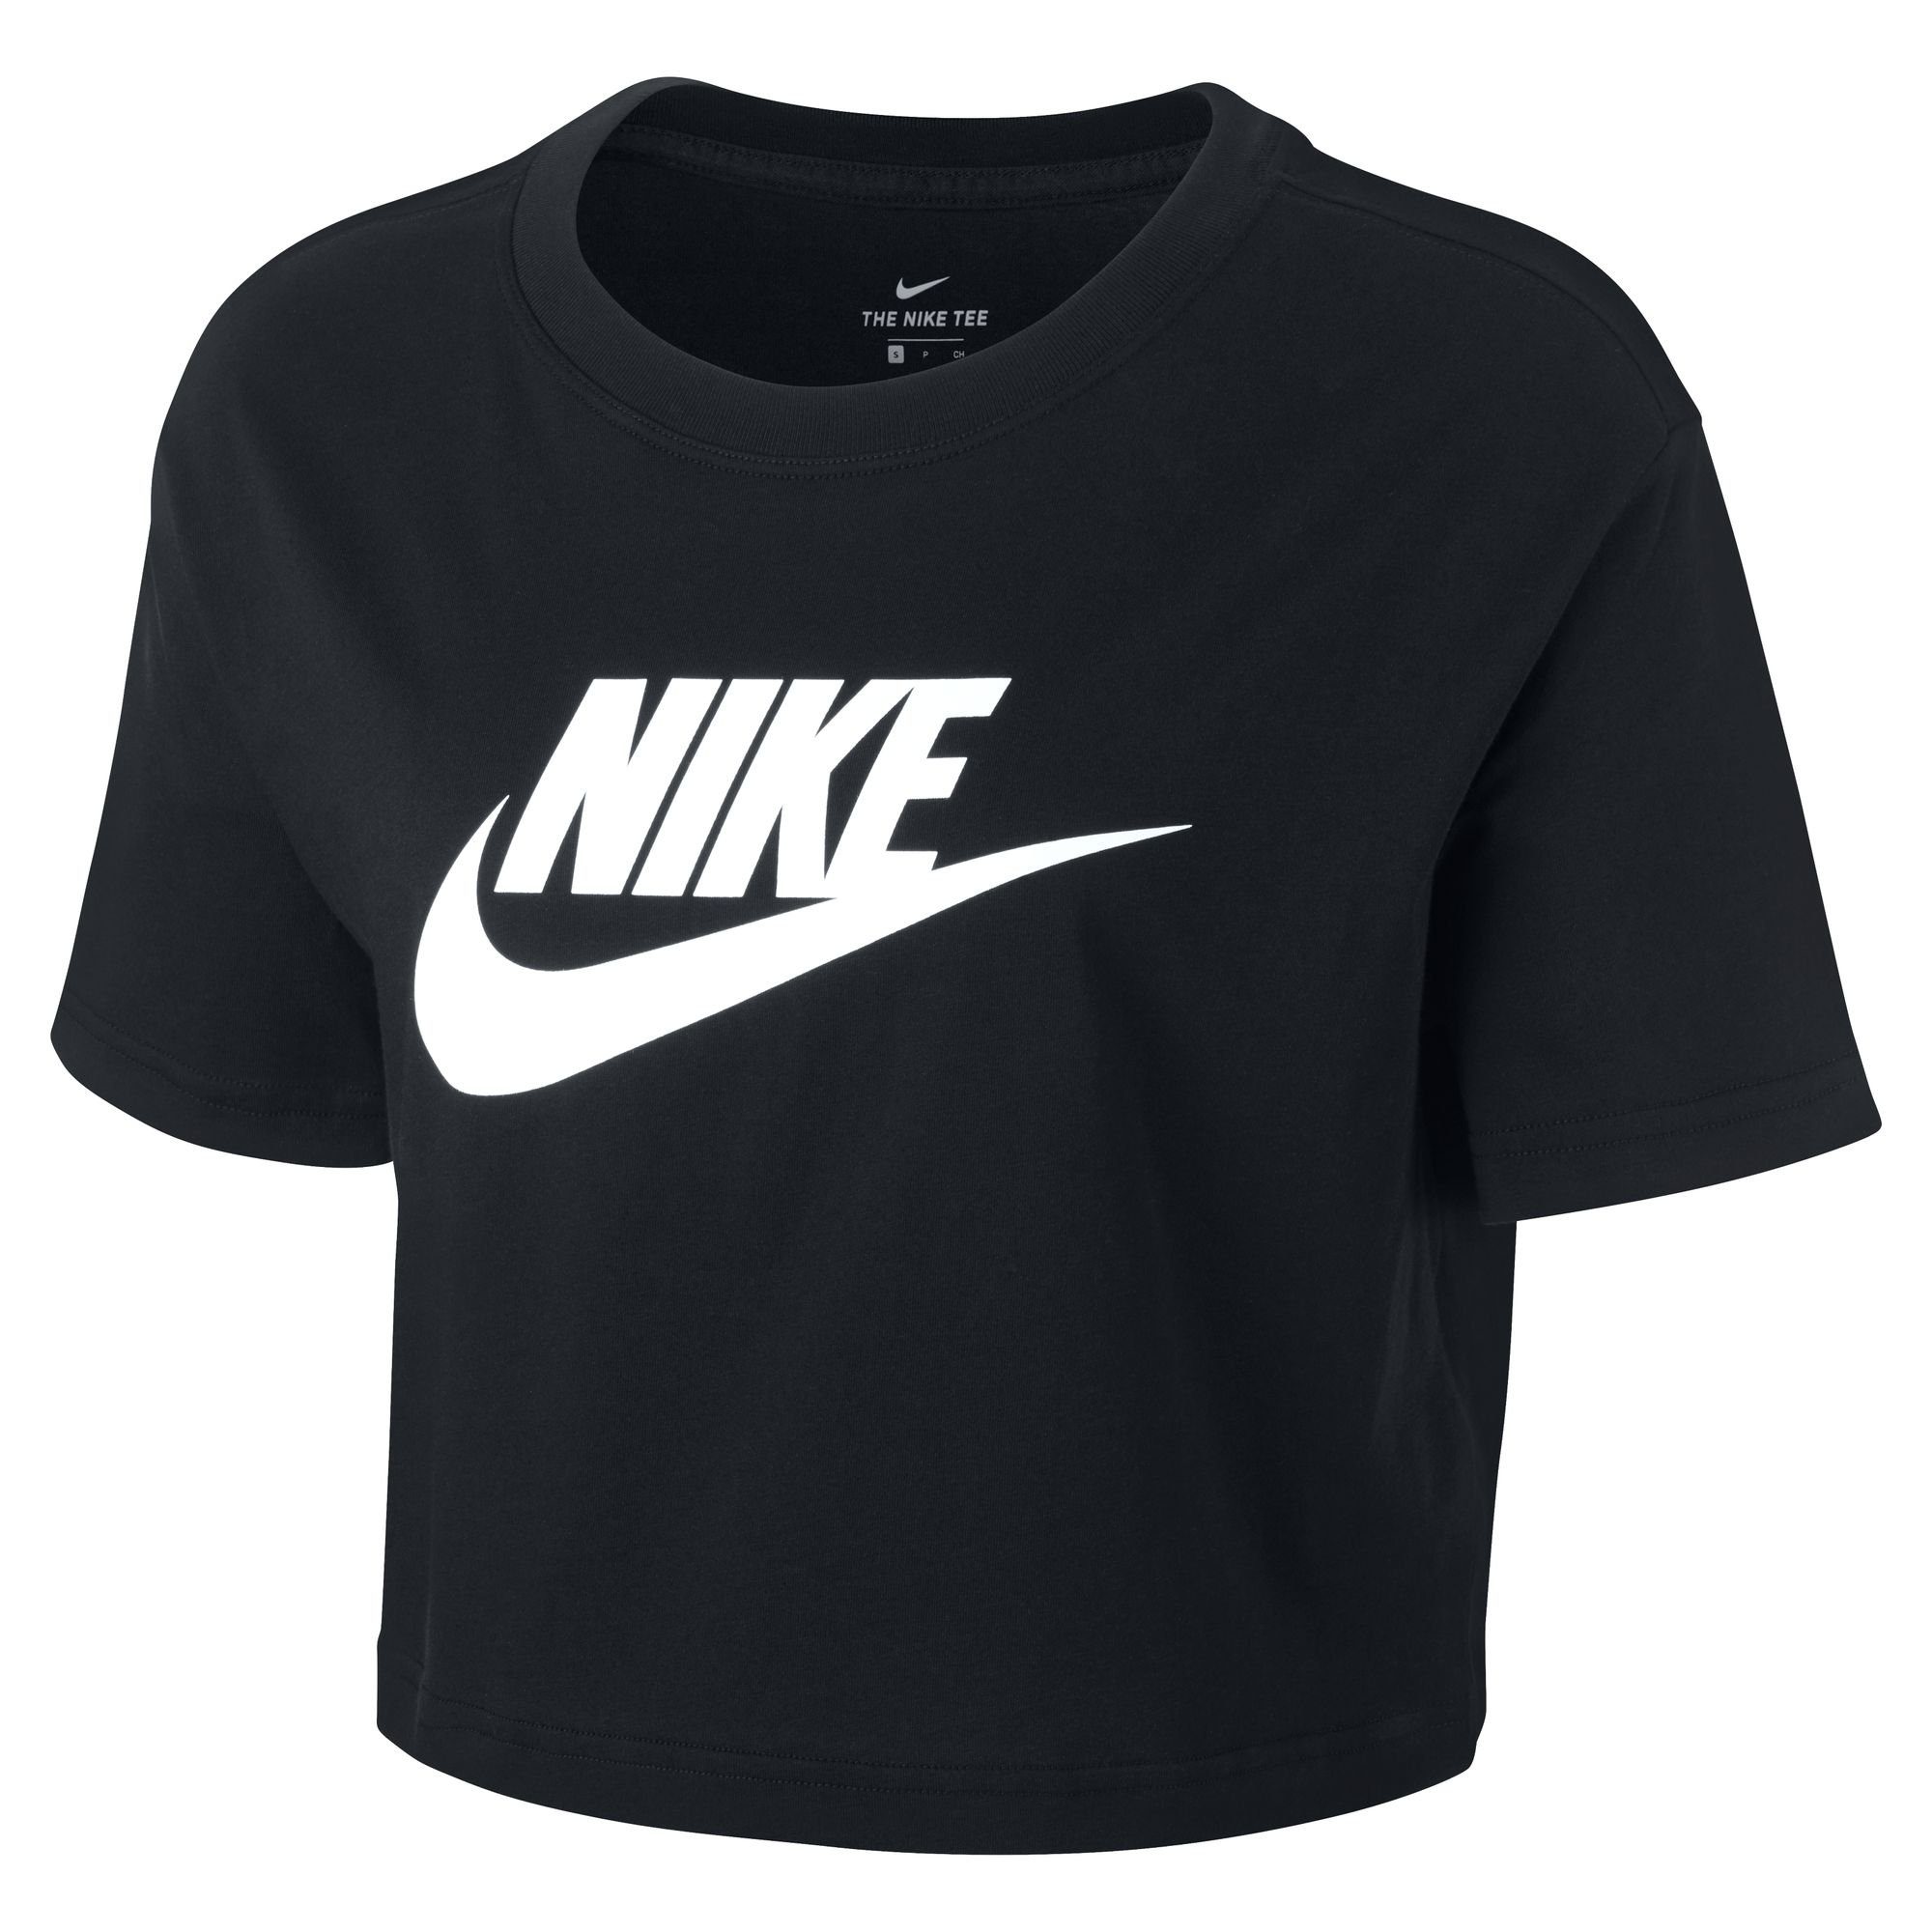 CROPPED T-Shirt ESSENTIAL Nike WOMEN'S T-SHIRT Sportswear LOGO schwarzweiss